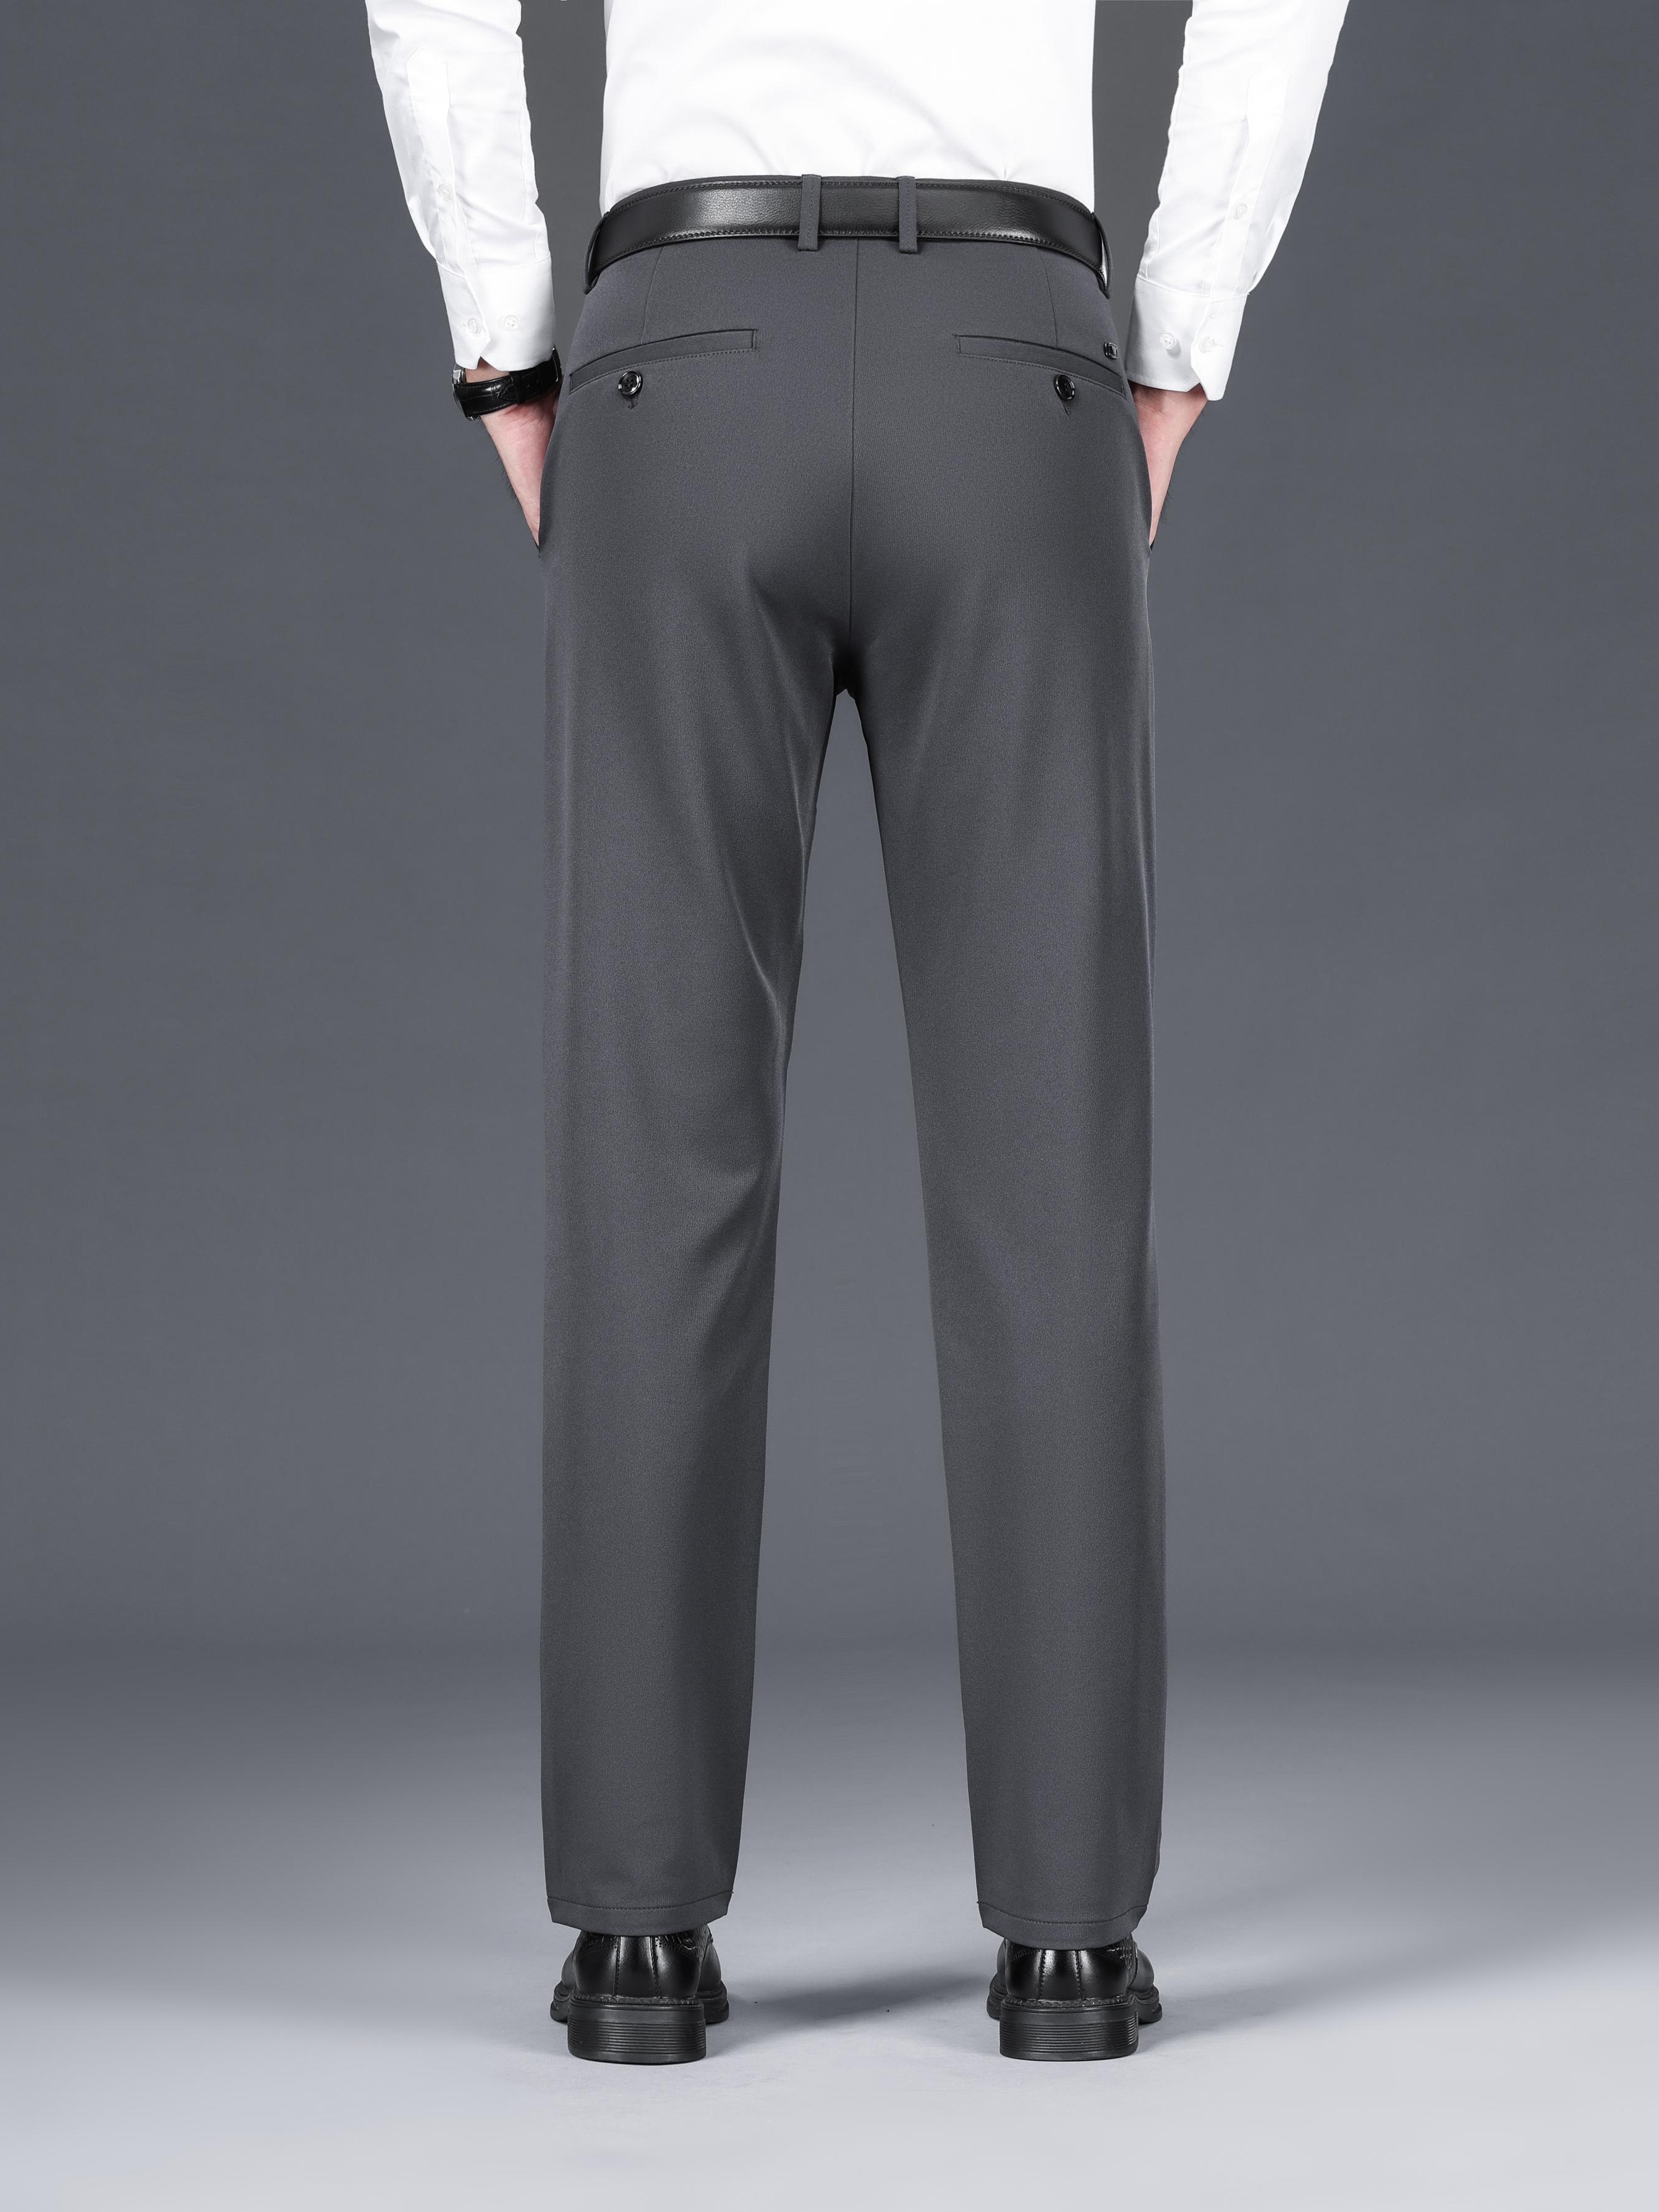 Natural Robertson Slim Stretch Dress Pant, Men's Bottom